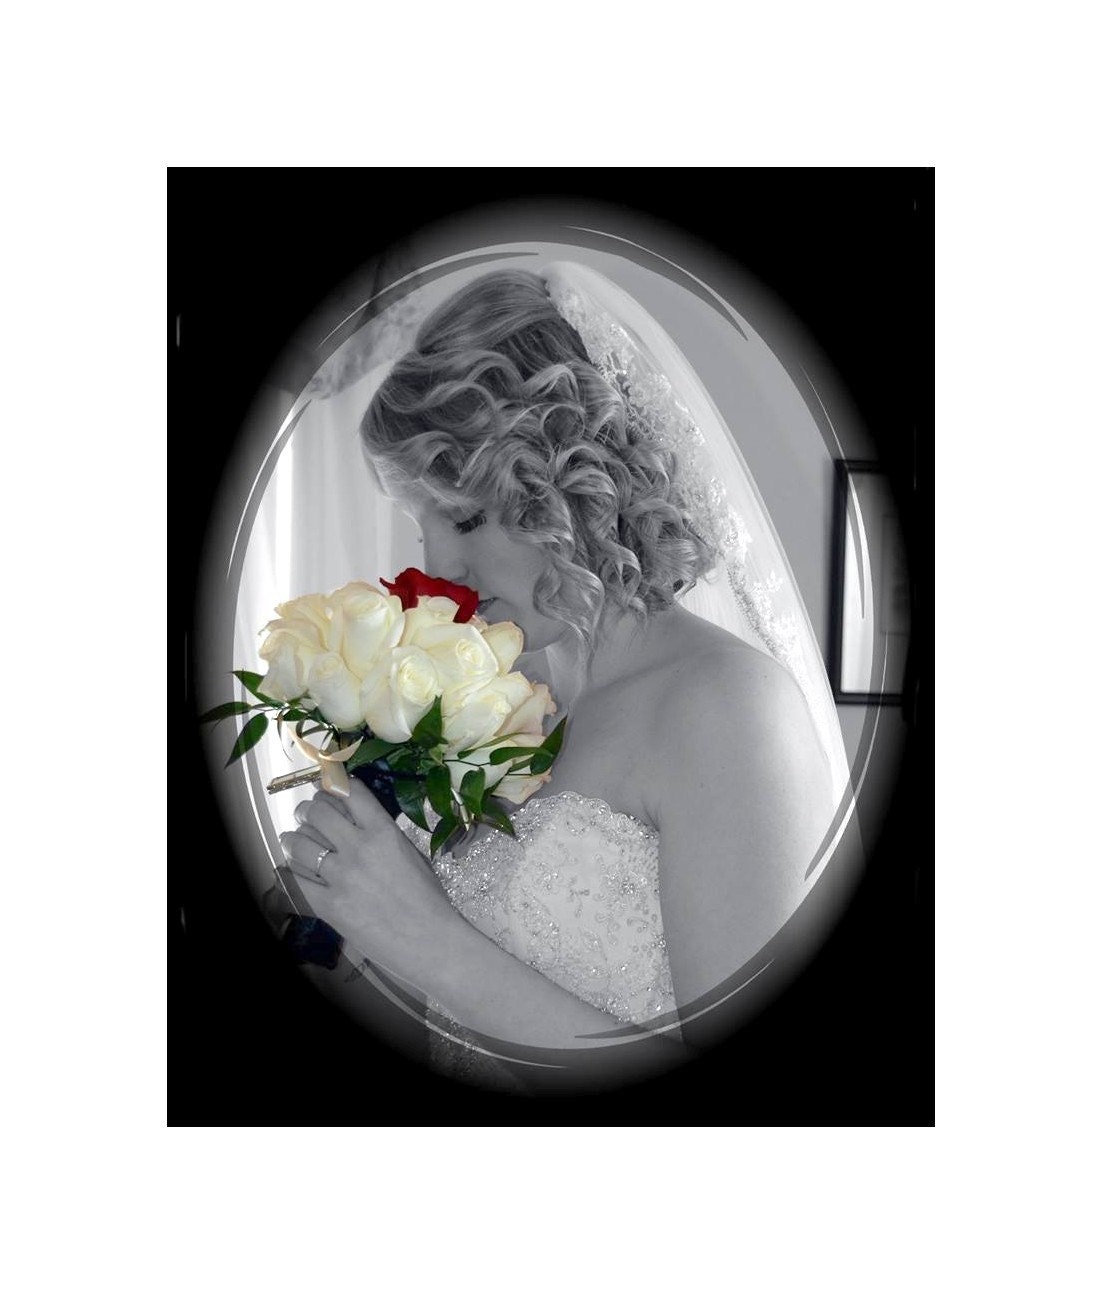 Bridal Bouquet / Boutonniere Charm, Jewelry Wedding KEEPSAKE Locket, For Bouquet/ Boutonniere, Amazing Customer Service & I LOVE the Locket